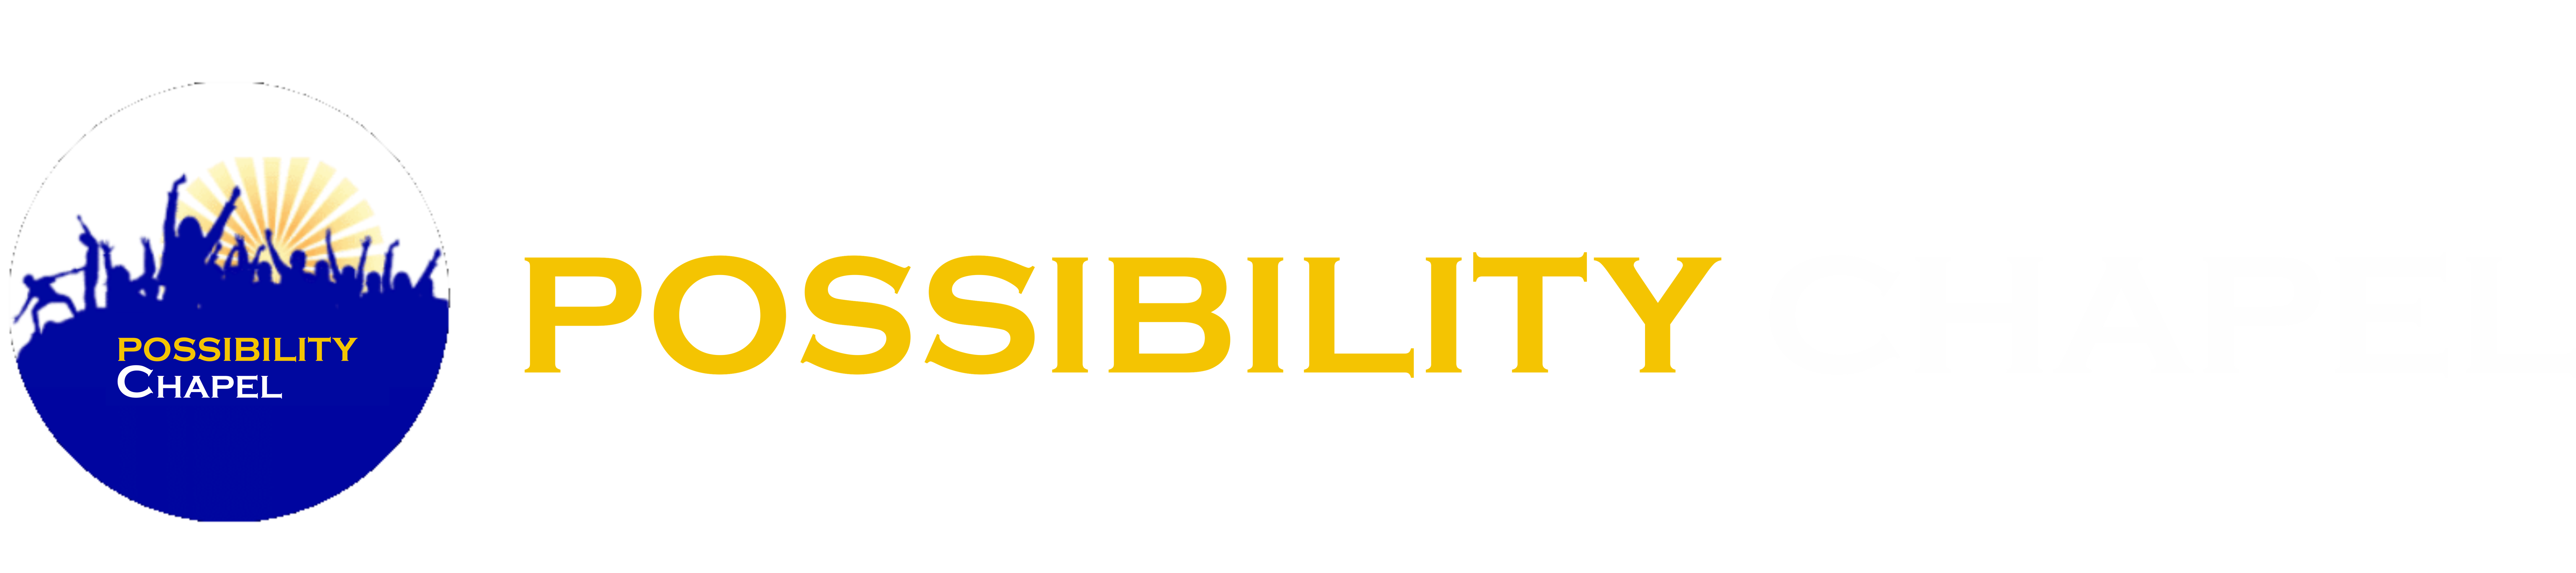 Possibility chapel logo two